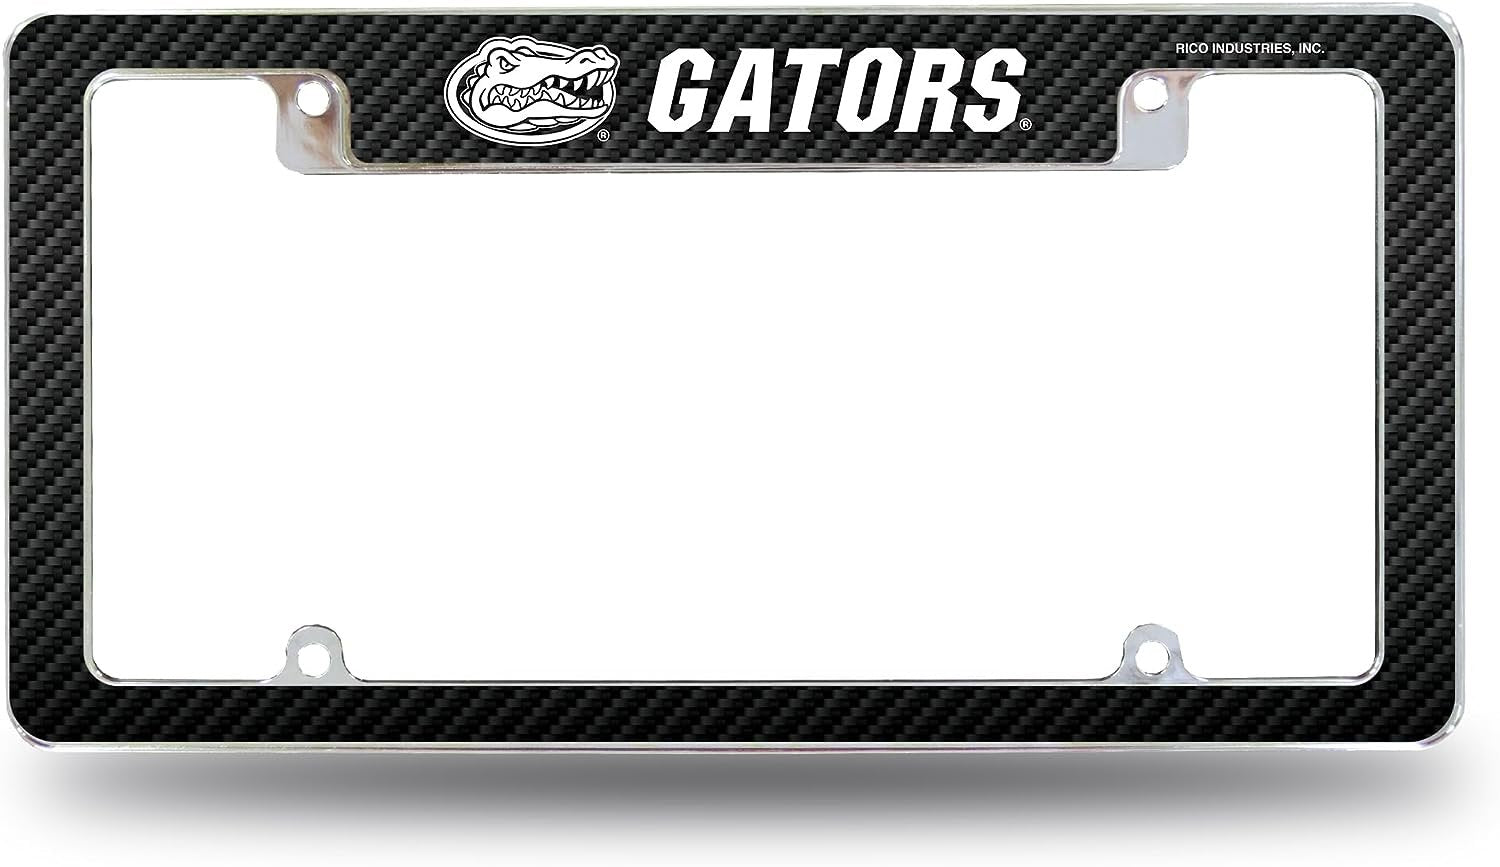 University of Florida Gators Metal License Plate Frame Chrome Tag Cover 12x6 Inch Carbon Fiber Design